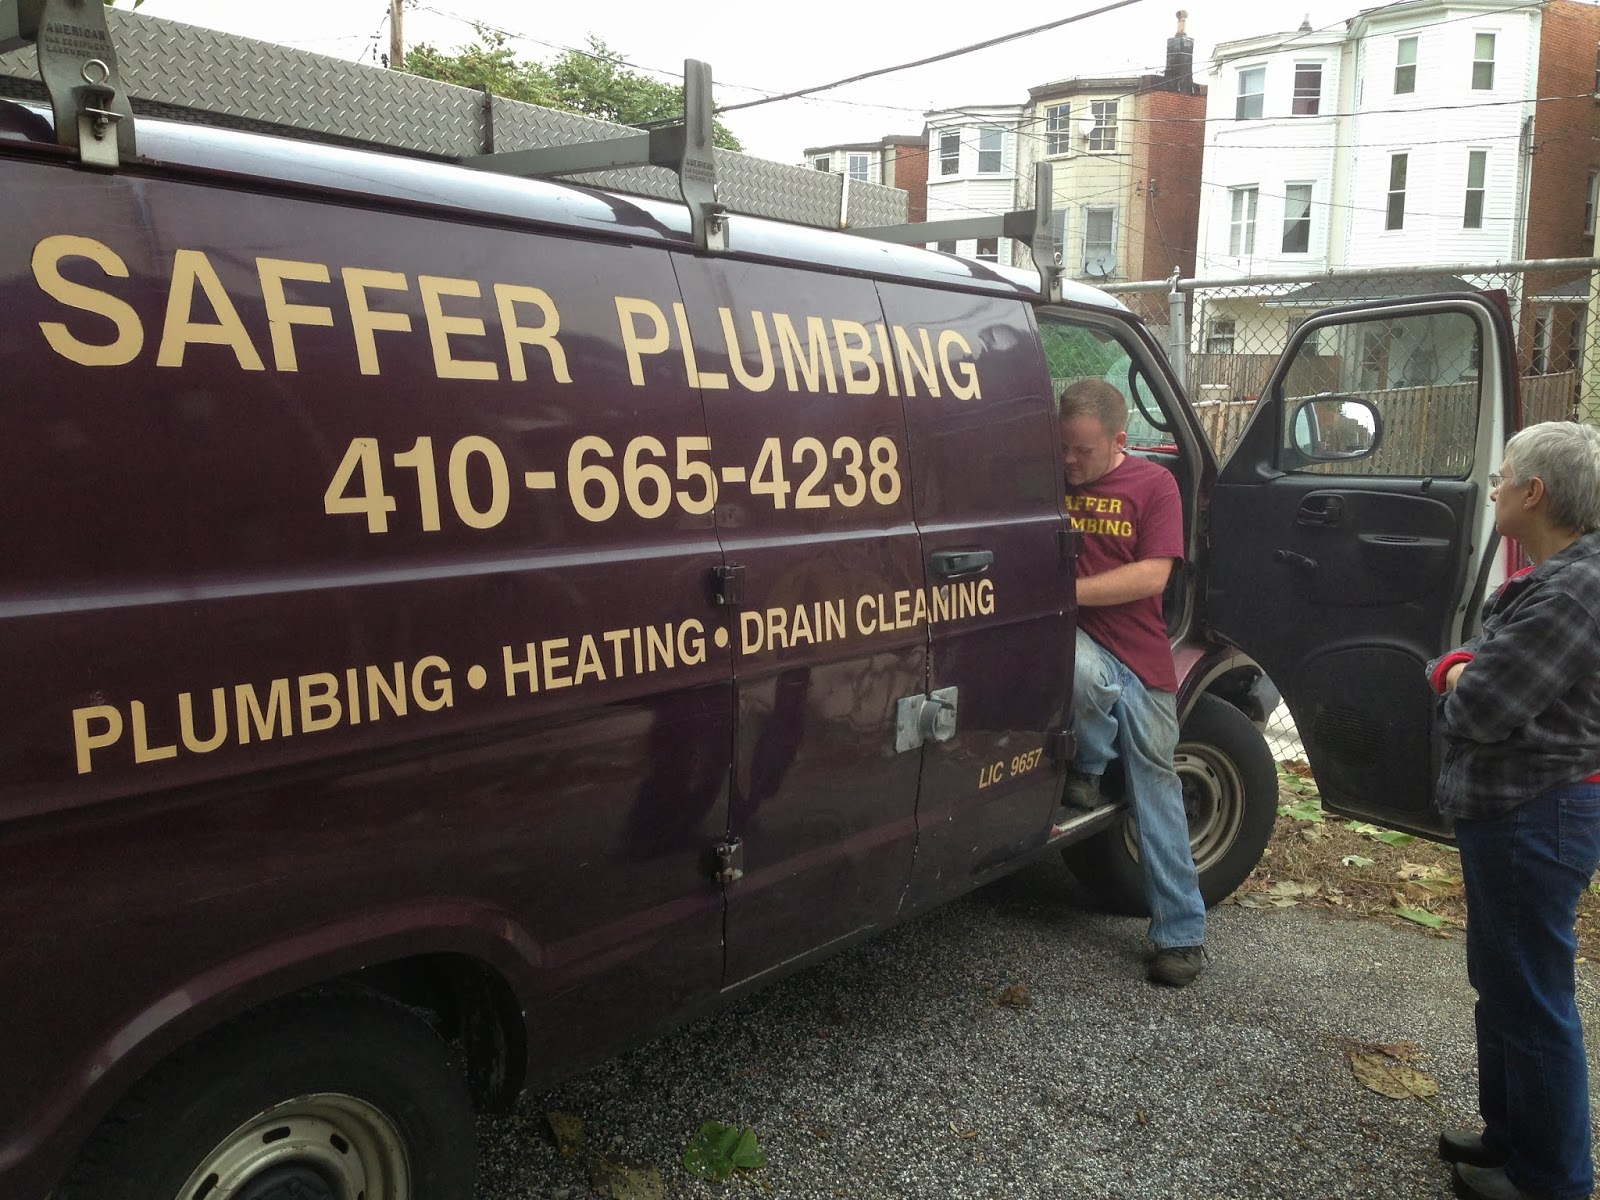 Saffer plumbing baltimore